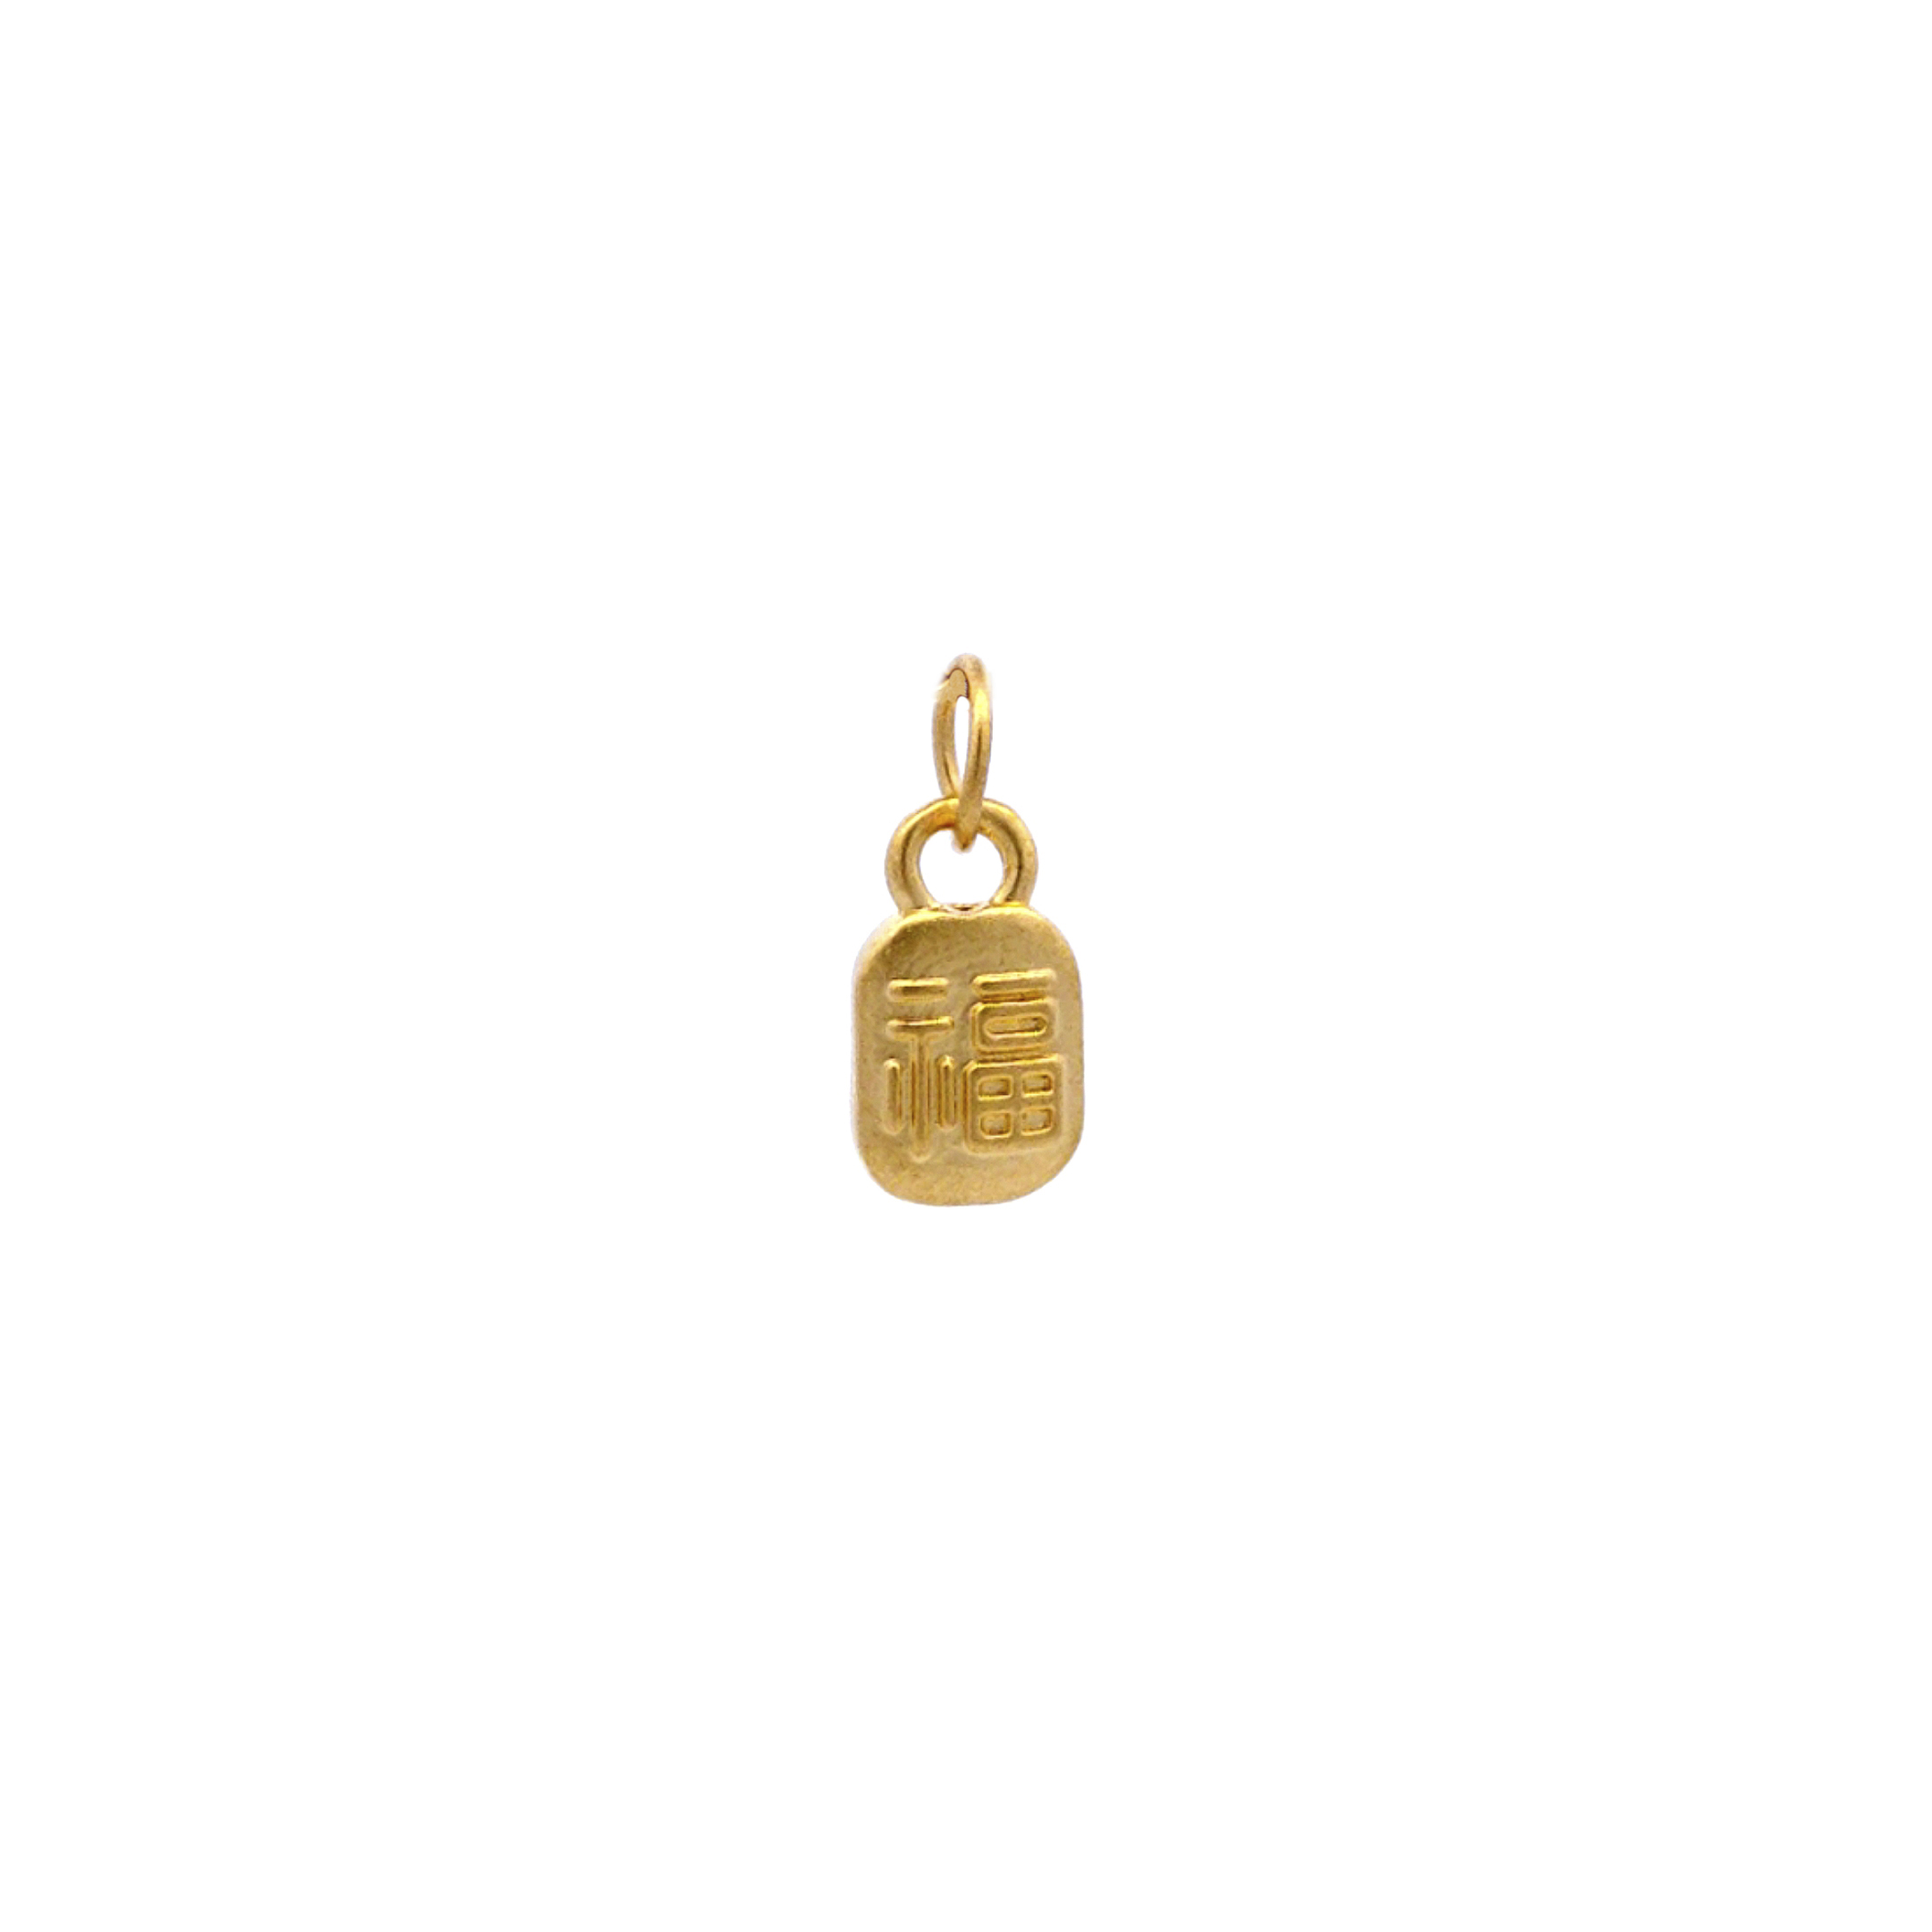 TIANSI 999 (24K) Gold Fortune Rectangle Pendant